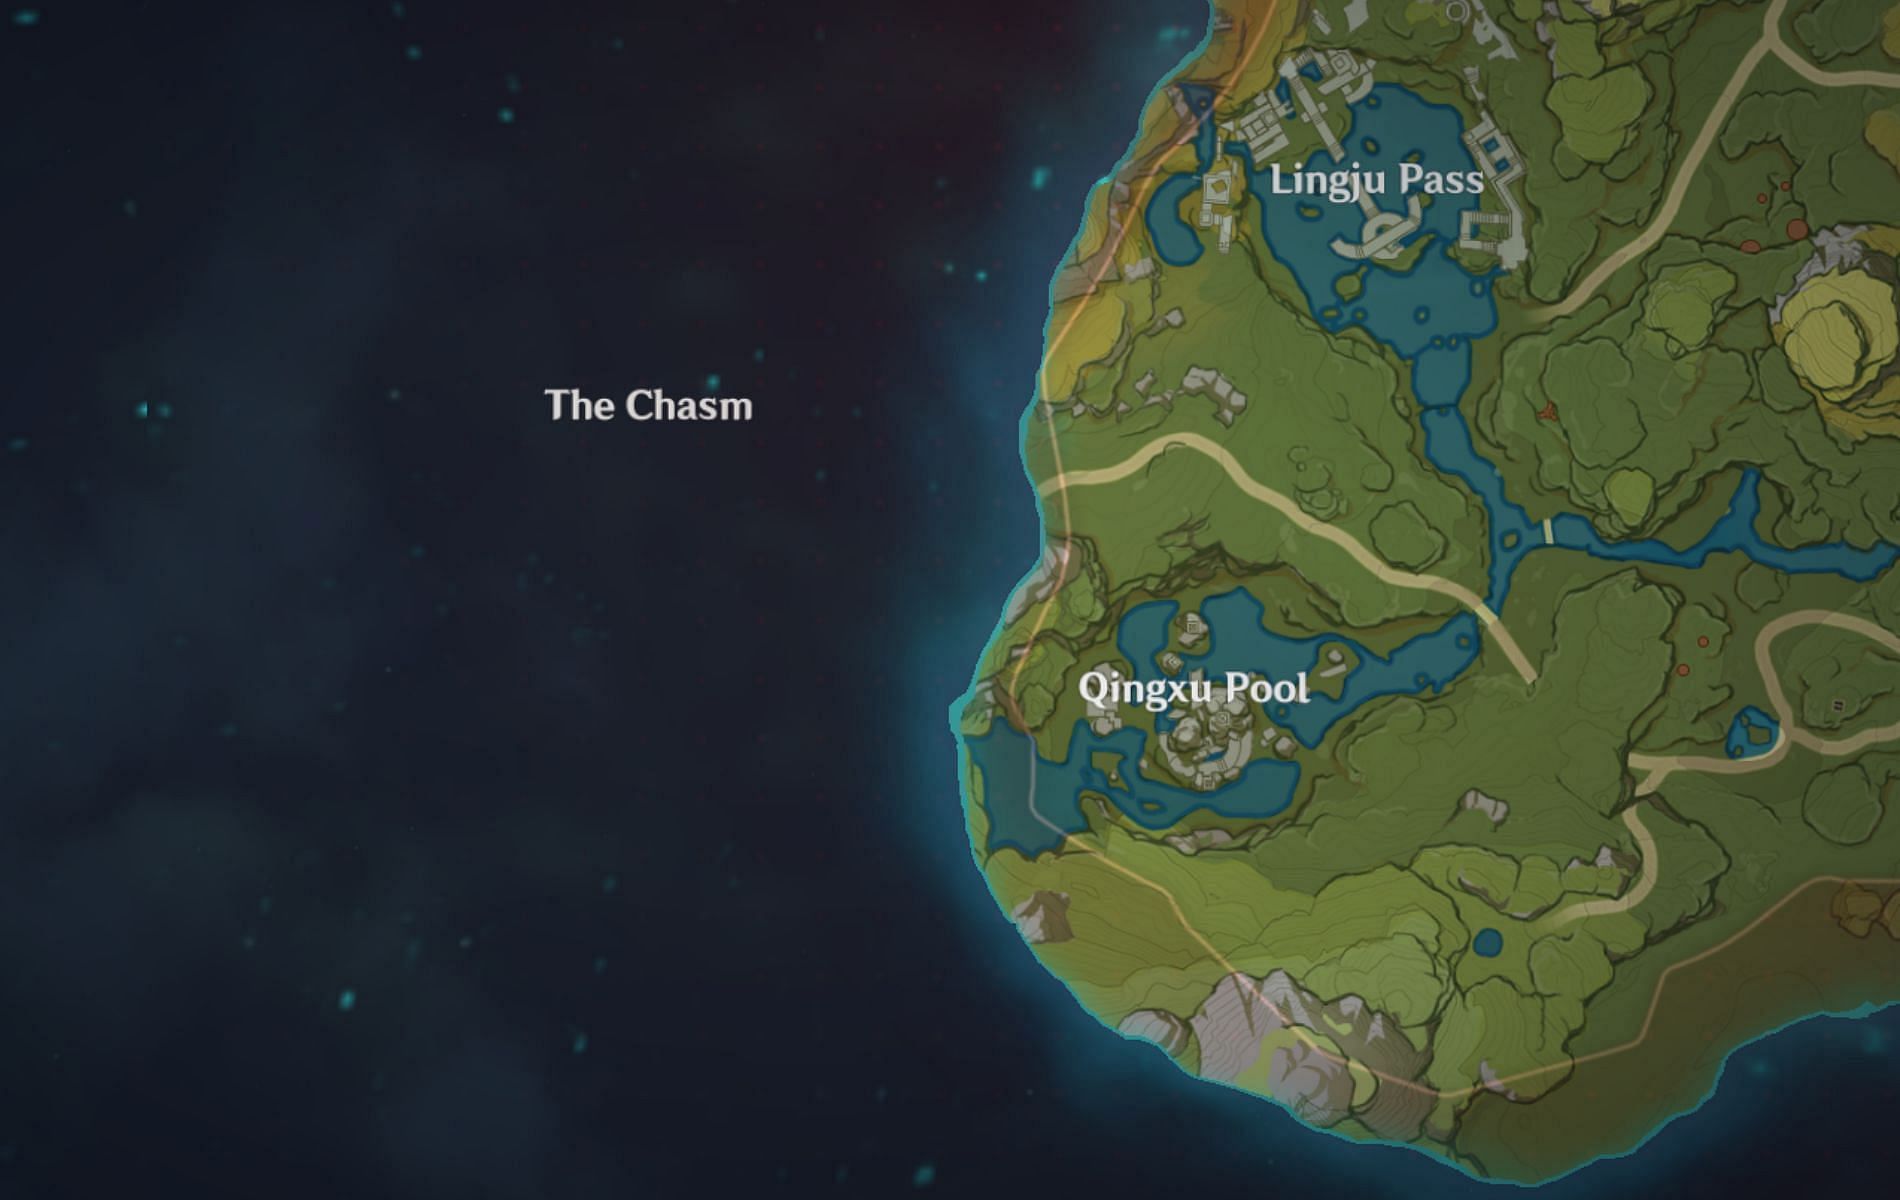 Chasm in-game (Image via Genshin Impact)